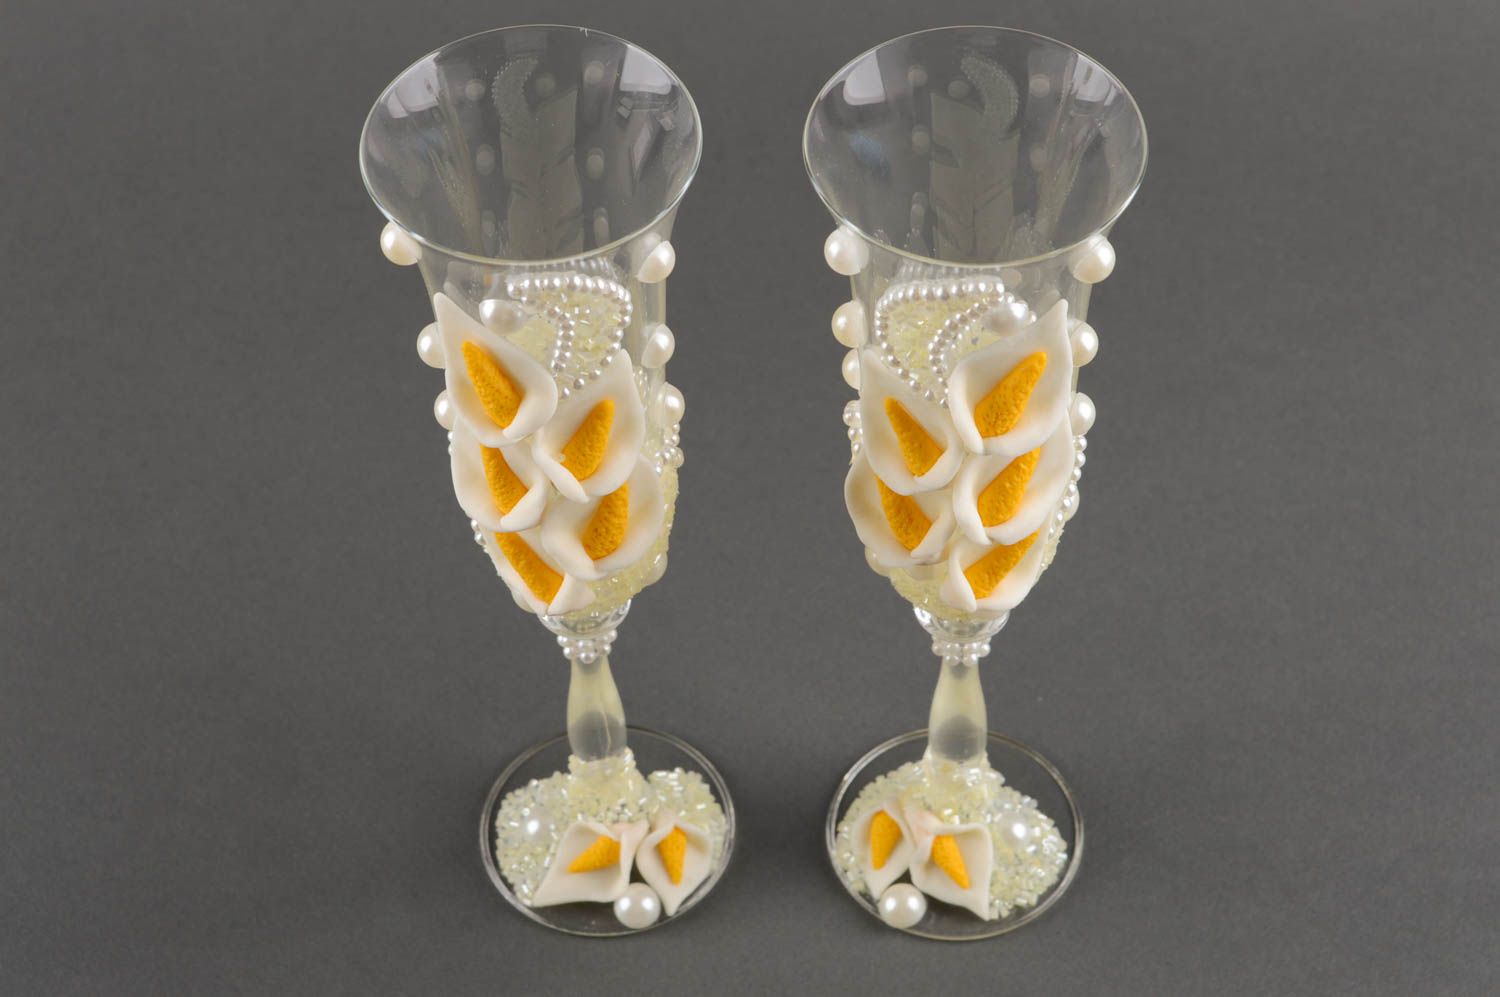 Best wine glasses handmade champagne glasses table decorating ideas wedding gift photo 5